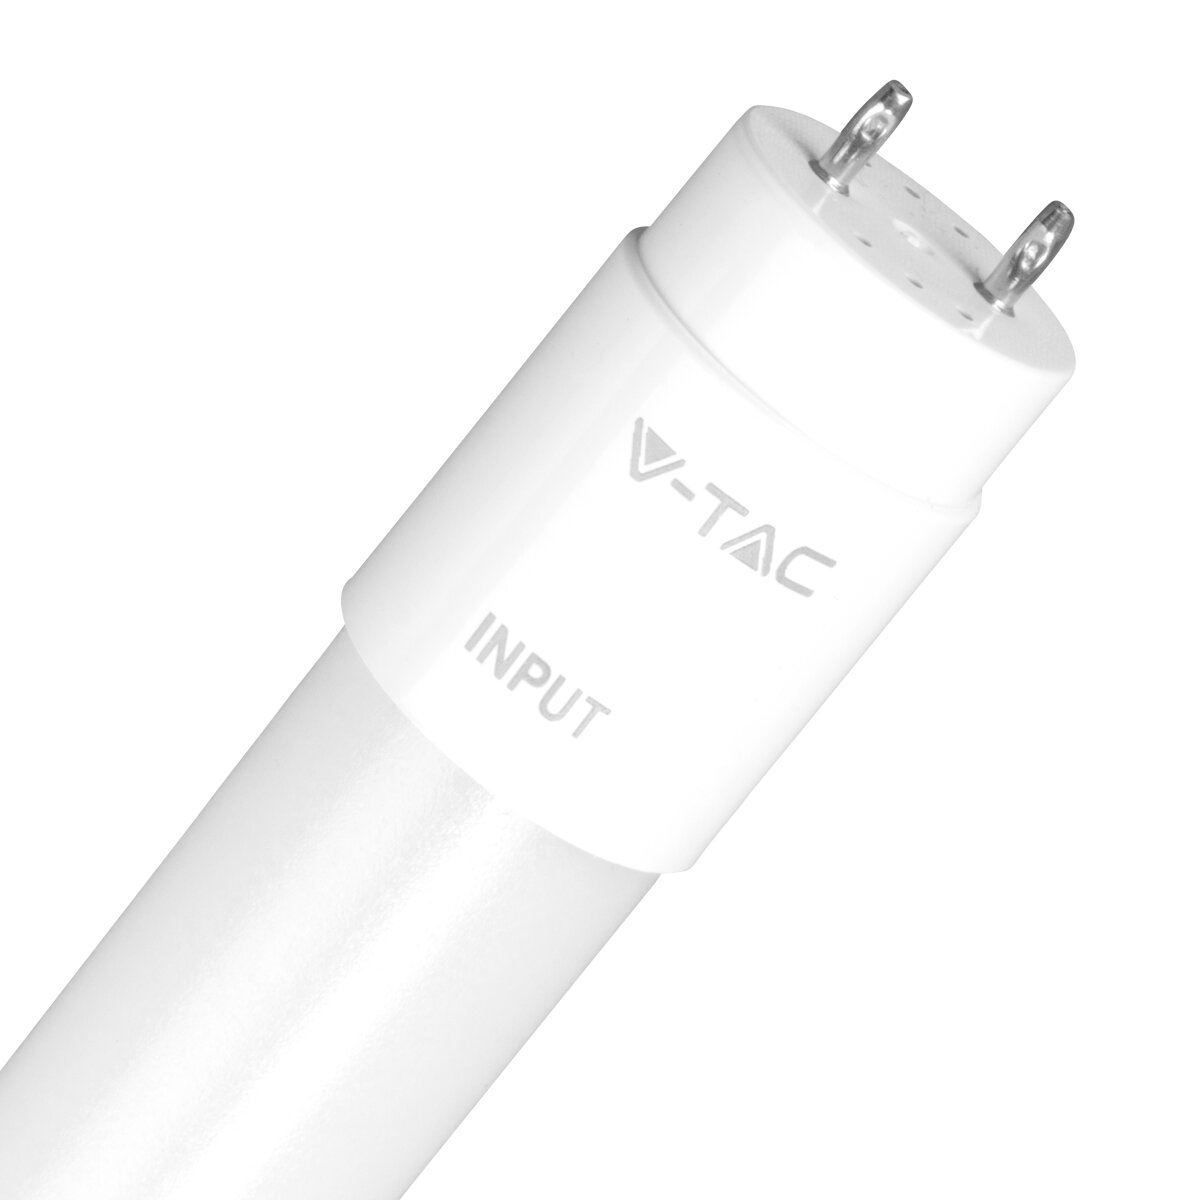 V-Tac LED Leuchtröhre 90cm, neutralweiß, 6272, 4,49 €